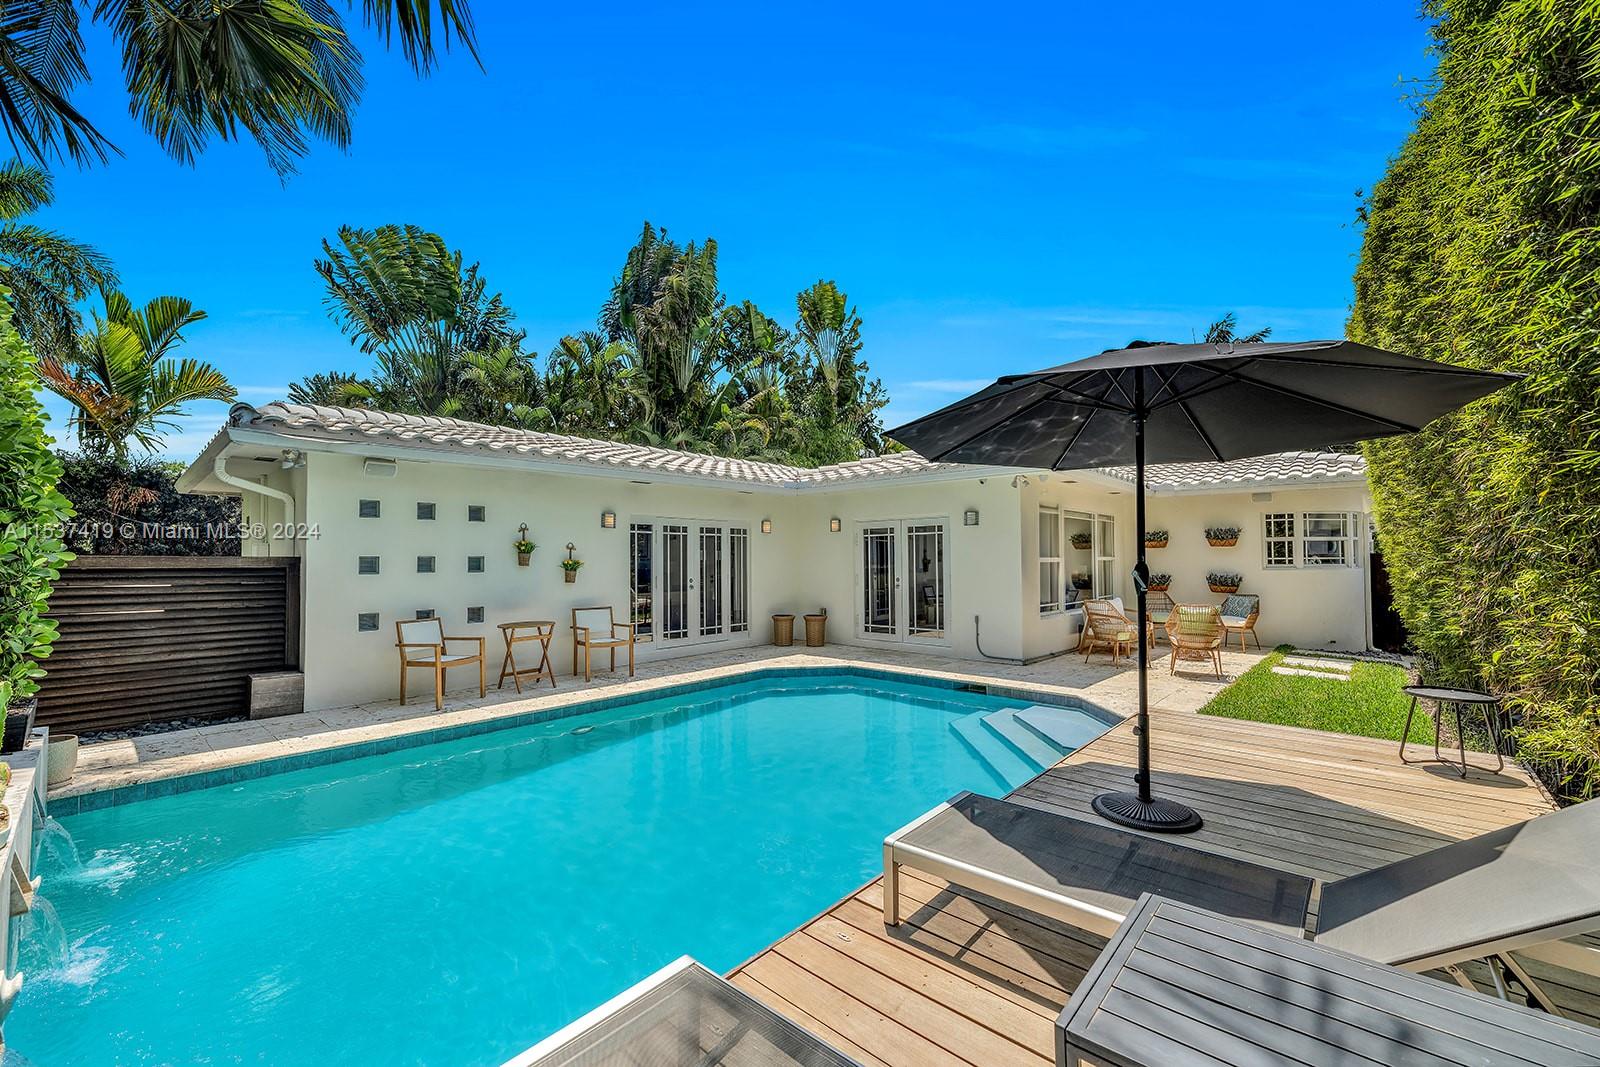 Rental Property at 5915 La Gorce Dr, Miami Beach, Miami-Dade County, Florida - Bedrooms: 4 
Bathrooms: 4  - $12,500 MO.